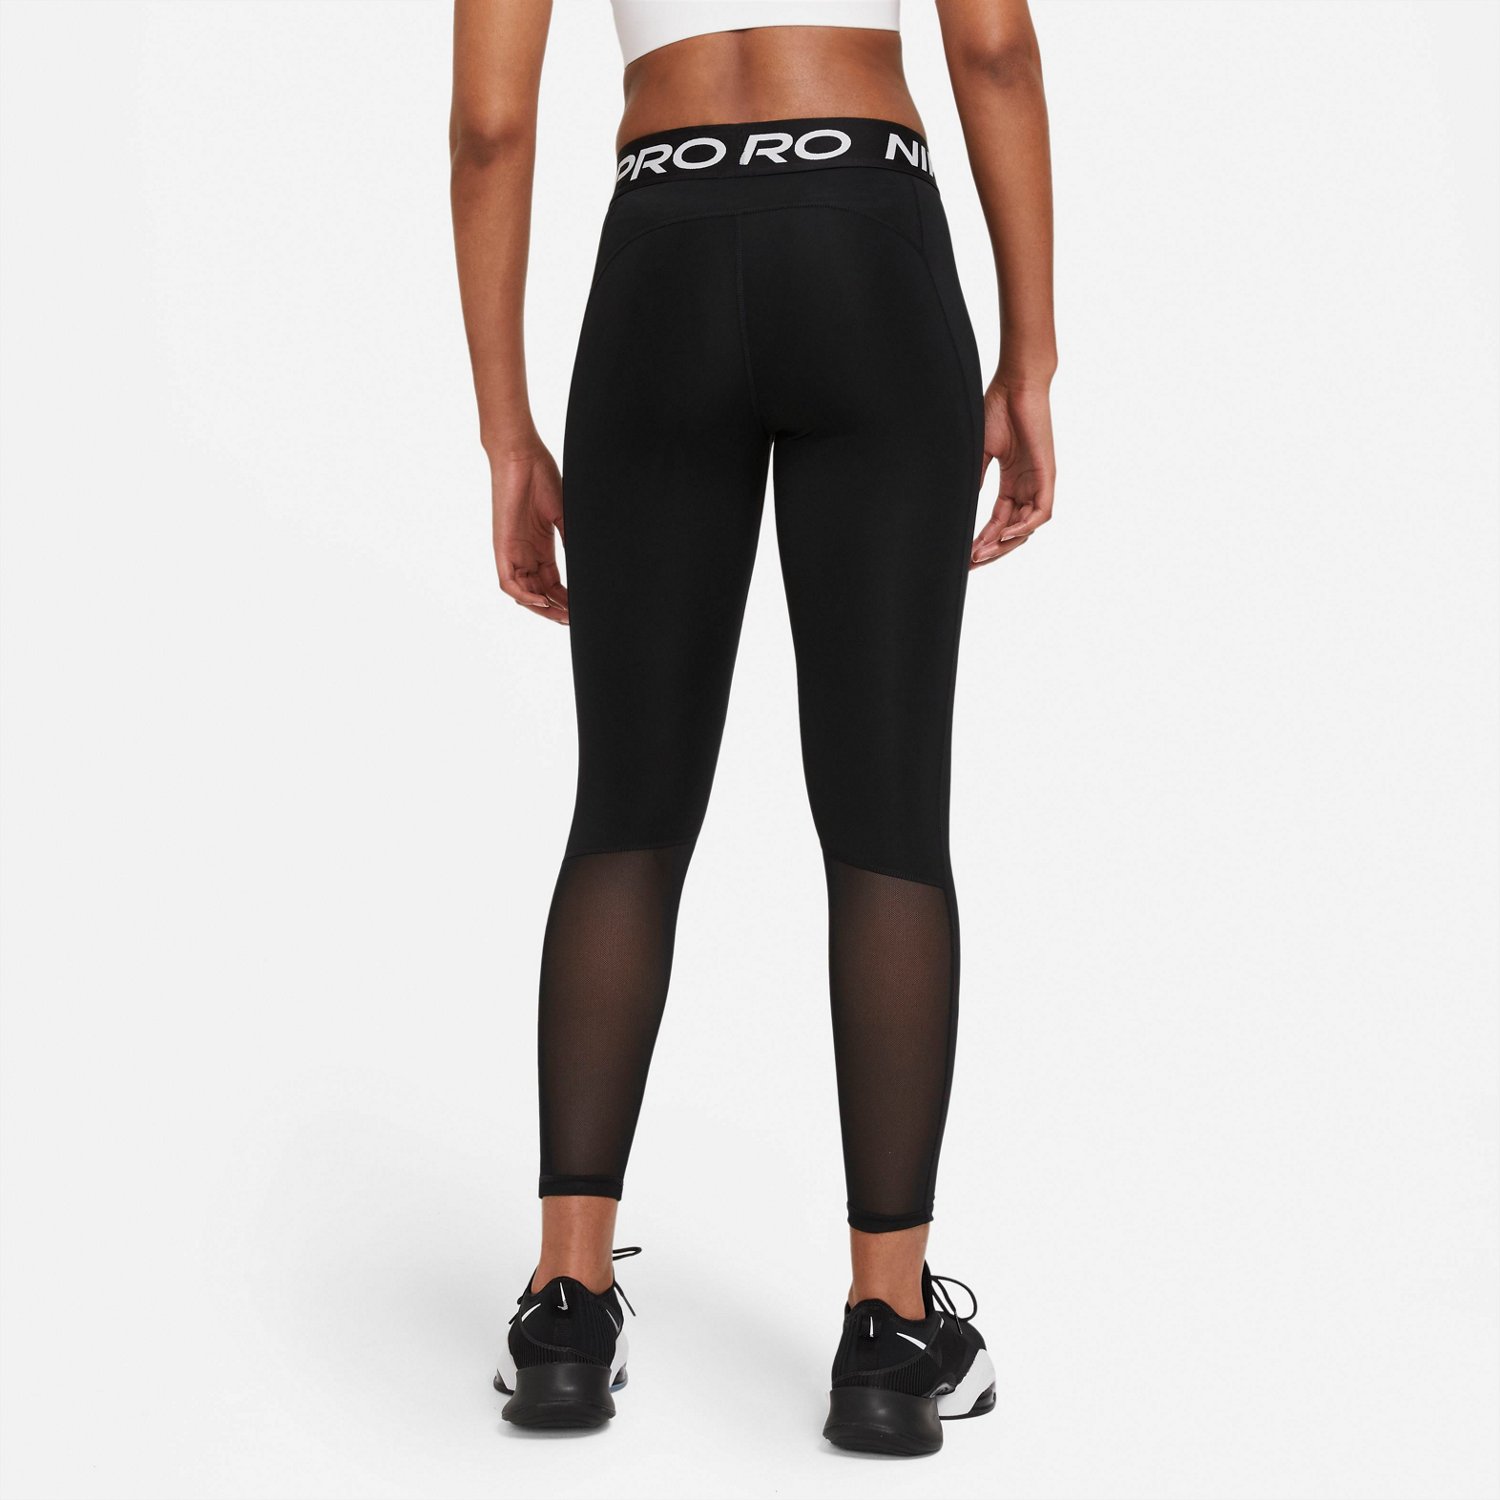 Nike Women's Pro Hyperwarm Training Tights - $29 - From Emily